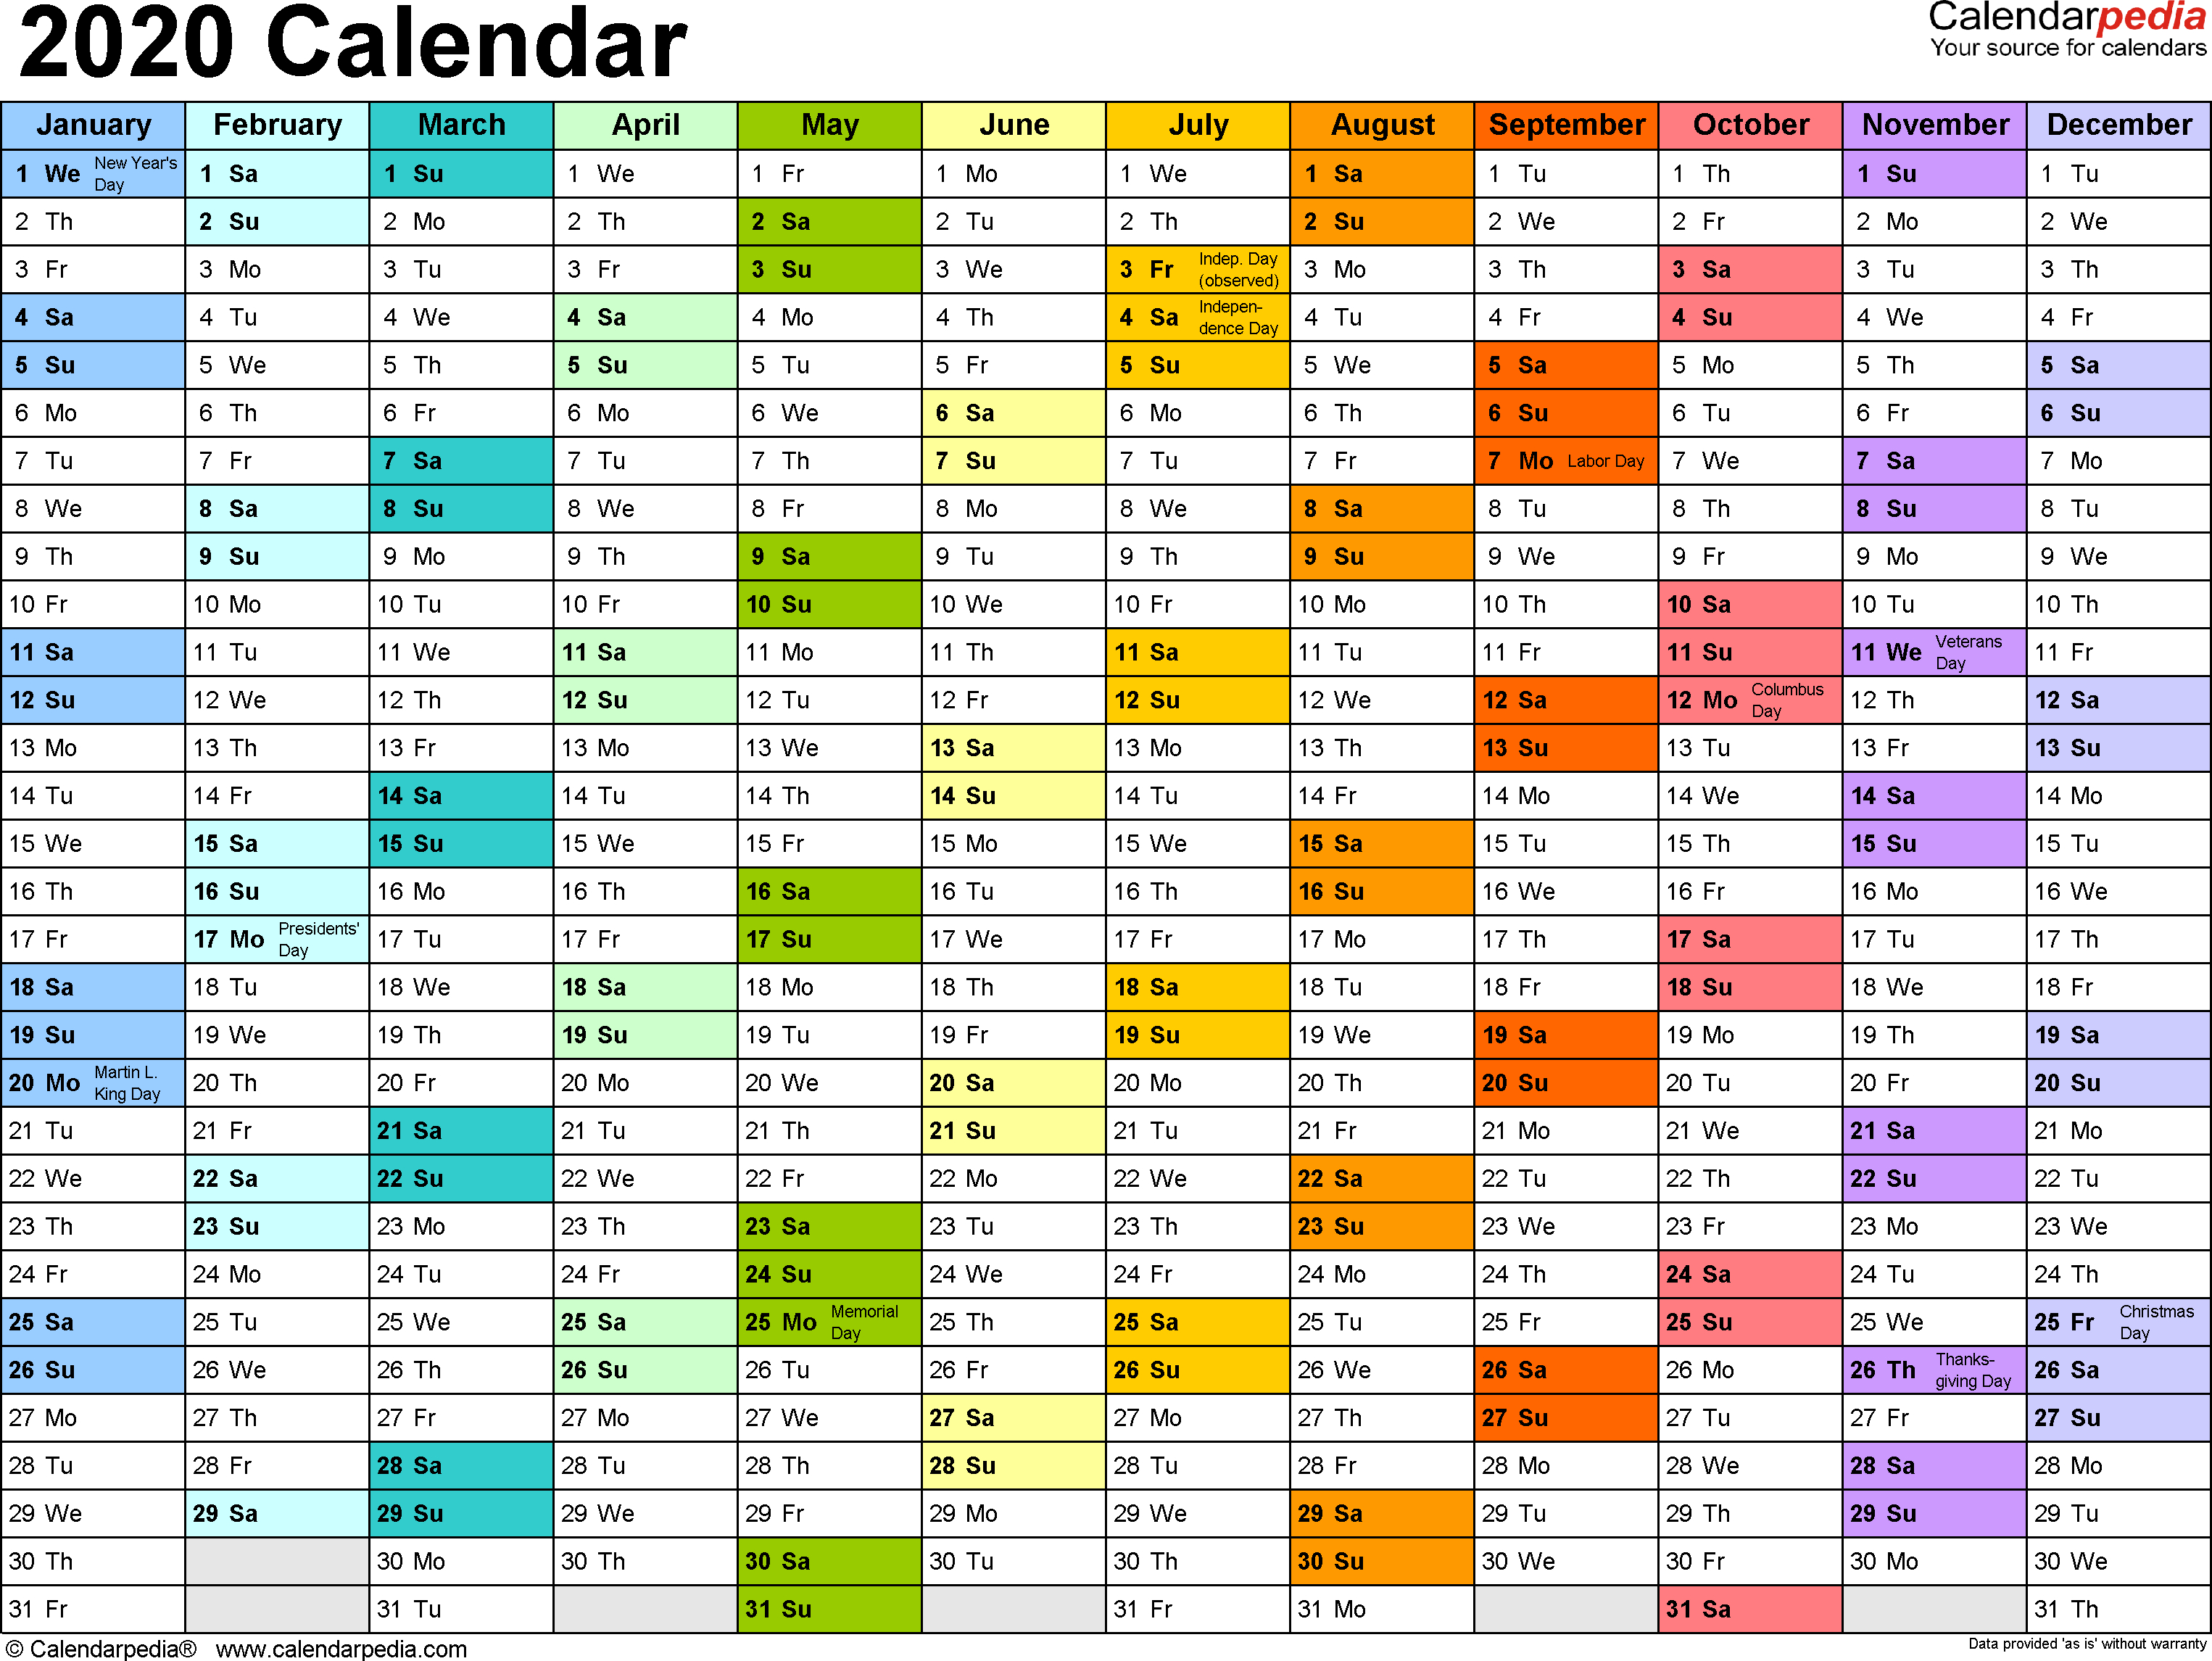 2020 Calendar  Download 18 Free Printable Excel Templates throughout Calendarpedia 2020 Excel